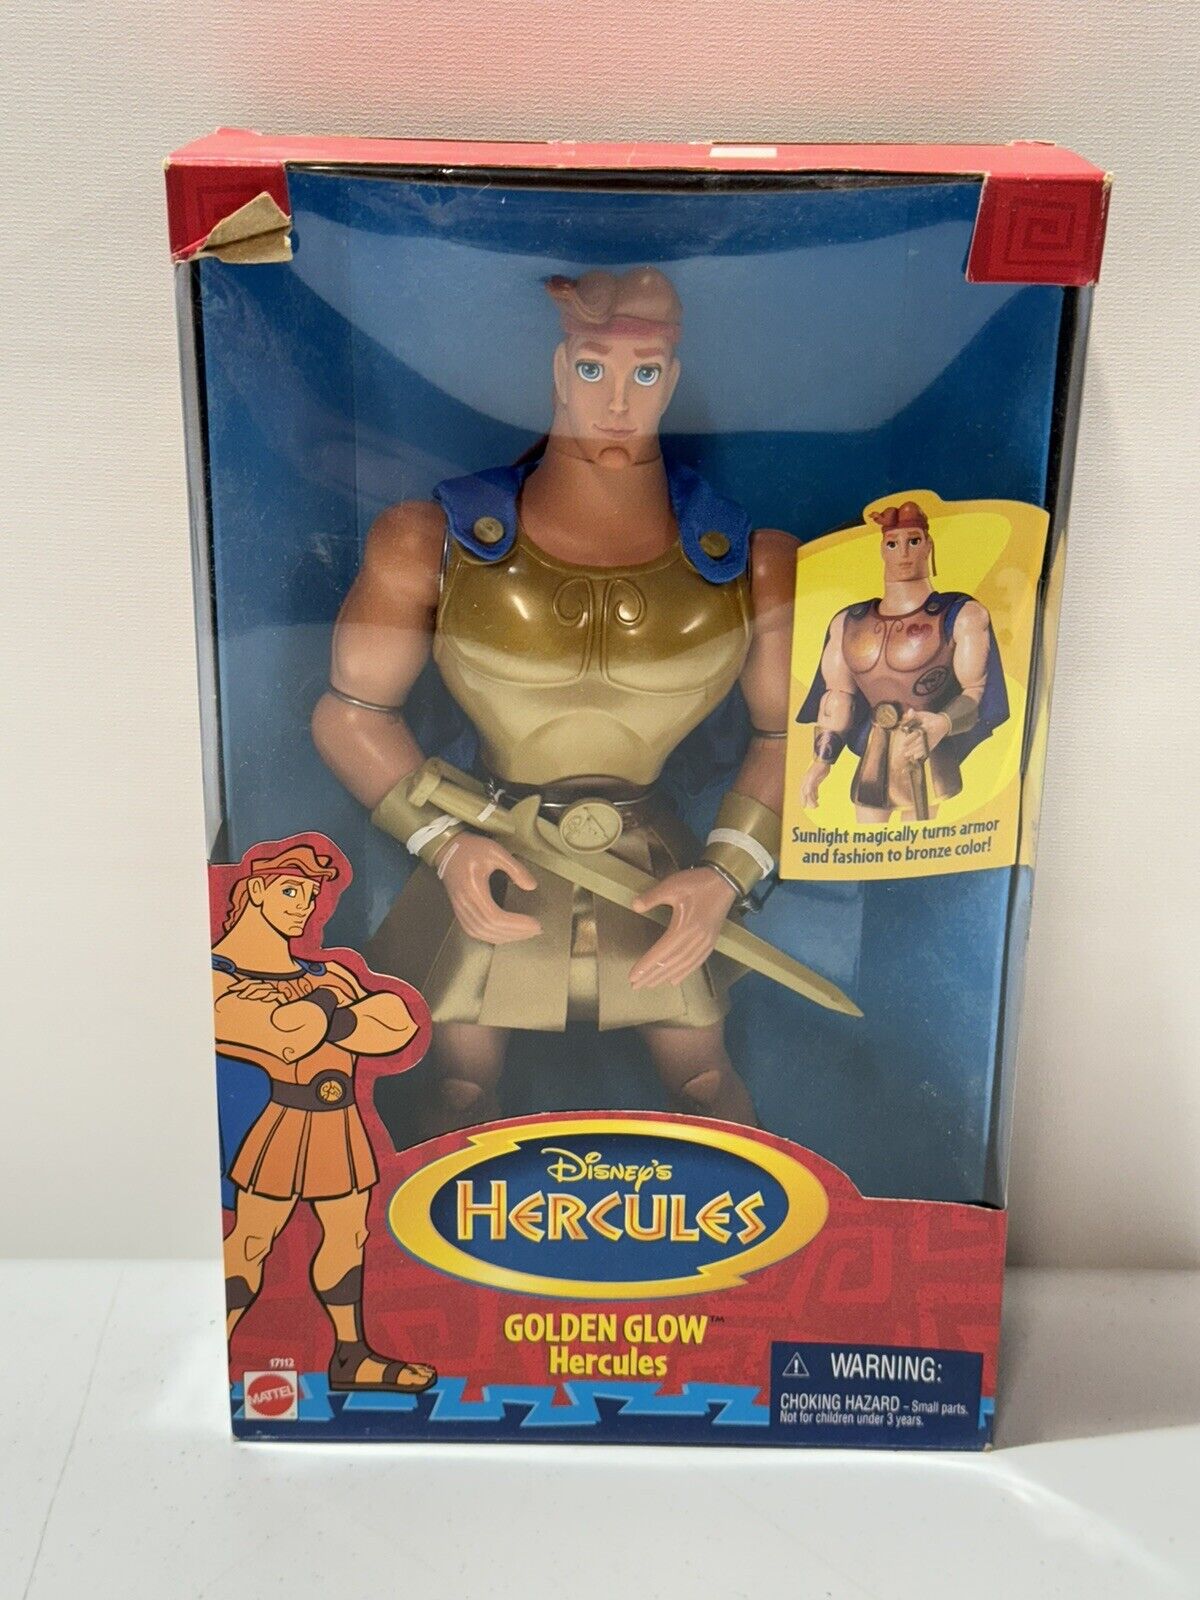 1996 Disneys Hercules, Golden Glow Hercules Mattel Figure - NEW/ SEALED